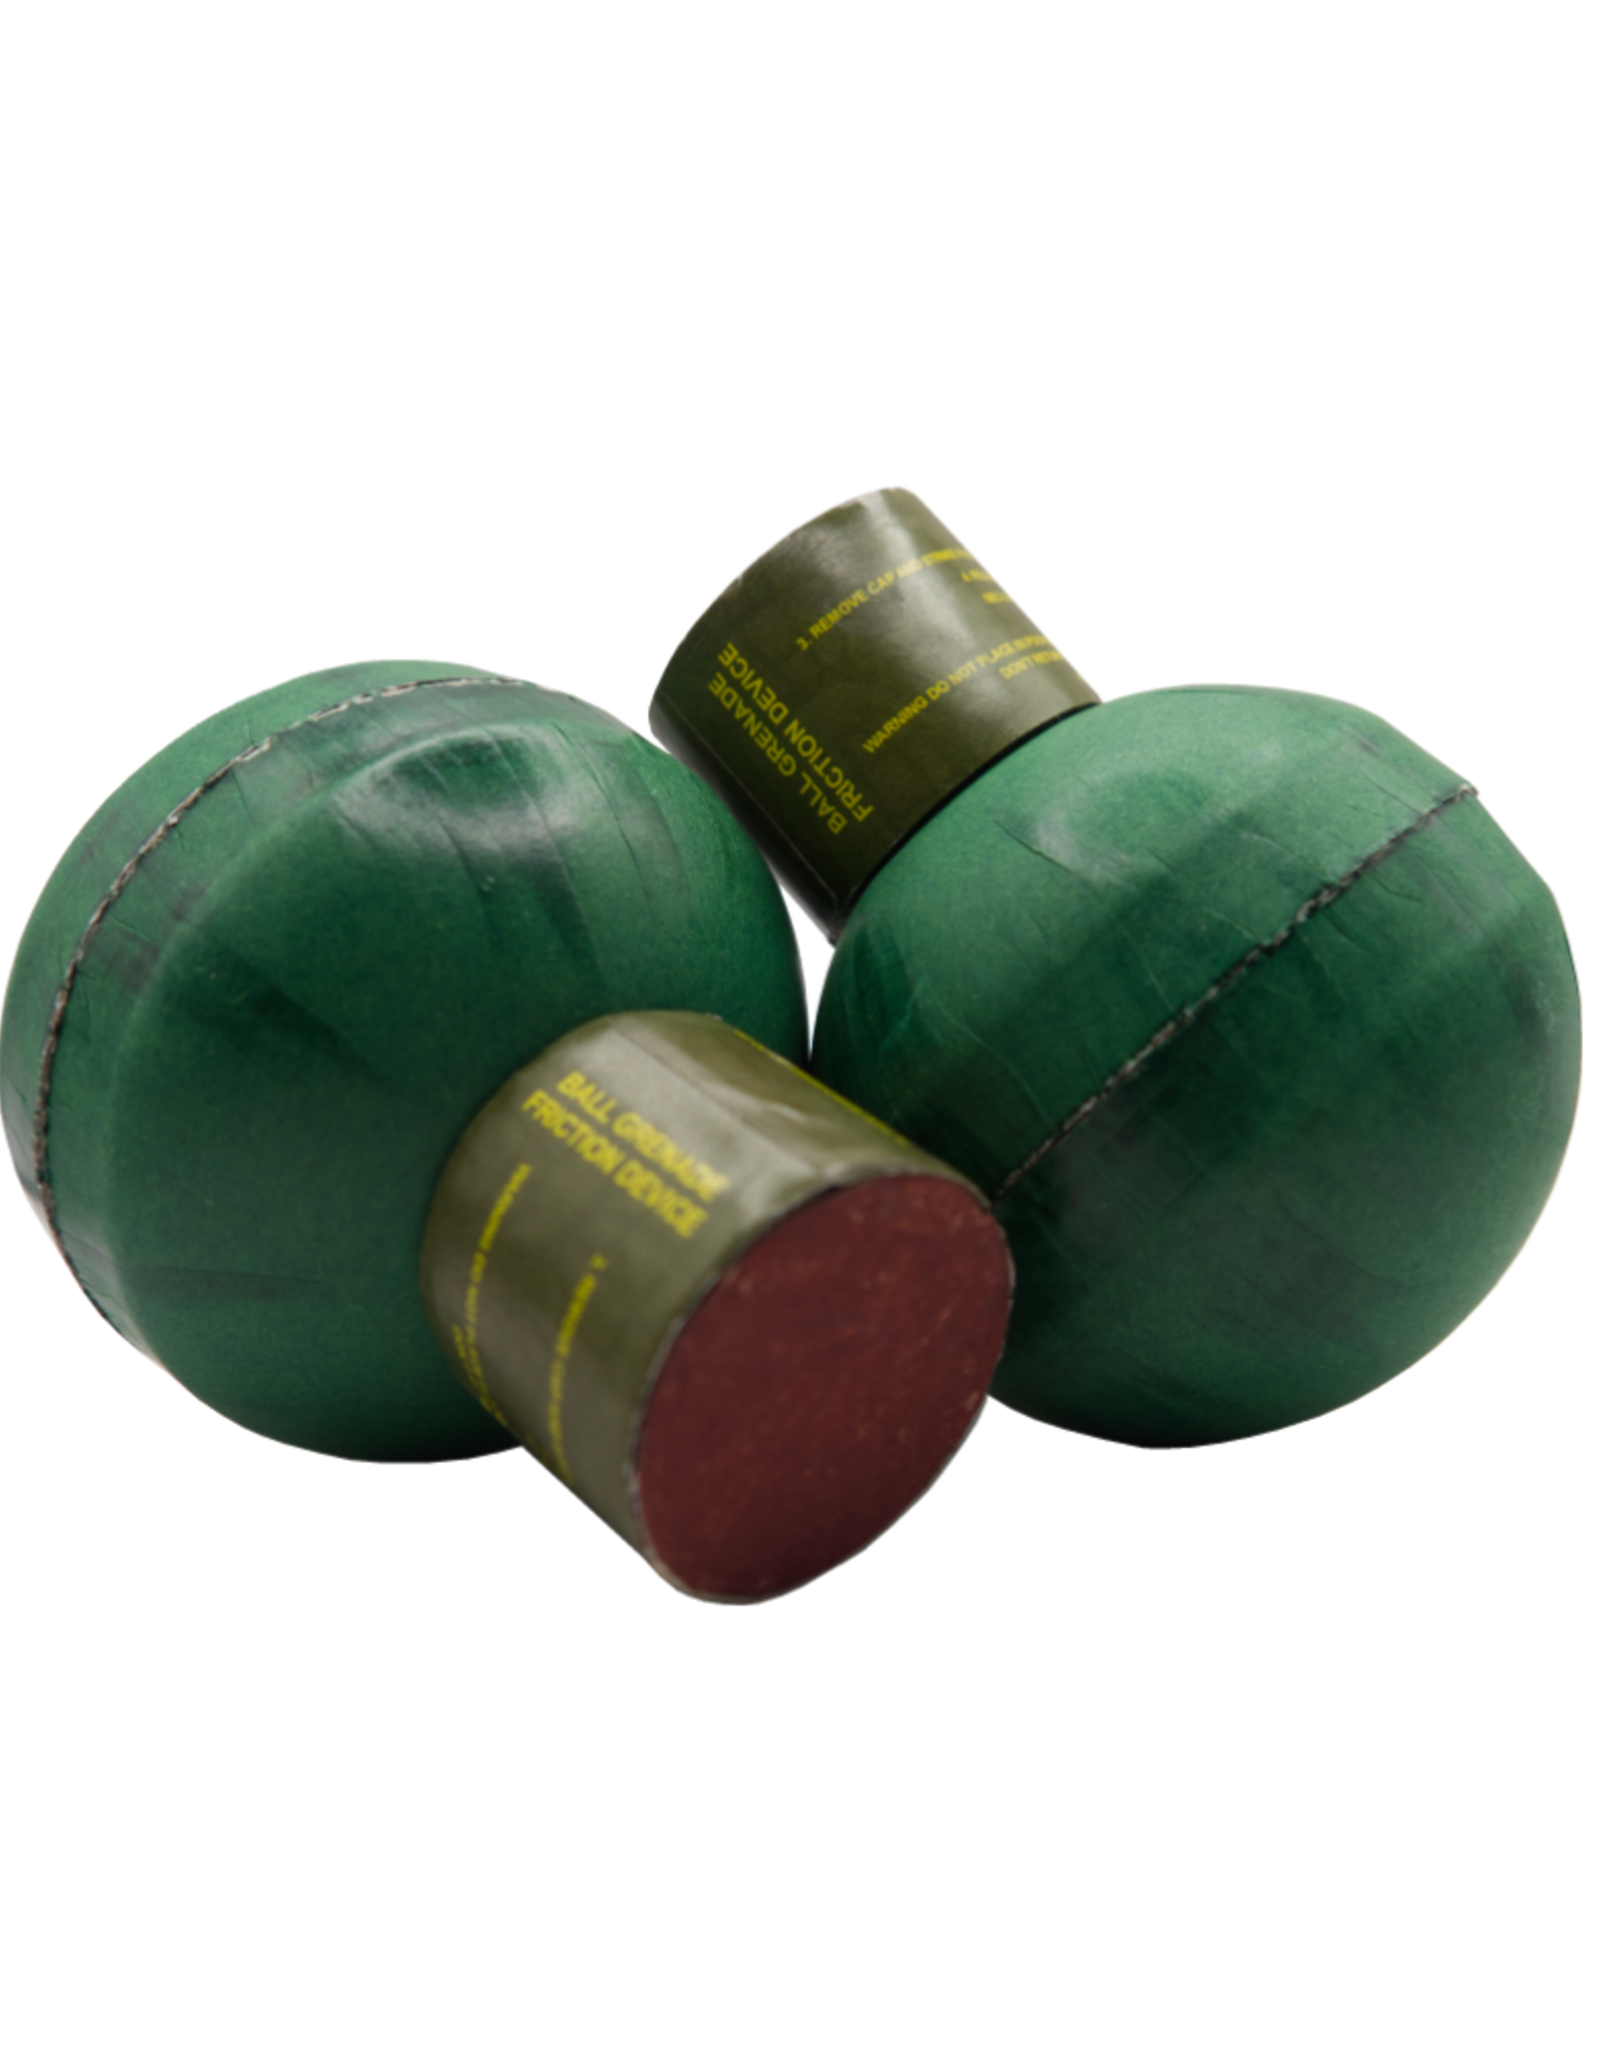 FBS Ball Grenade (Mk5 Friction Version)